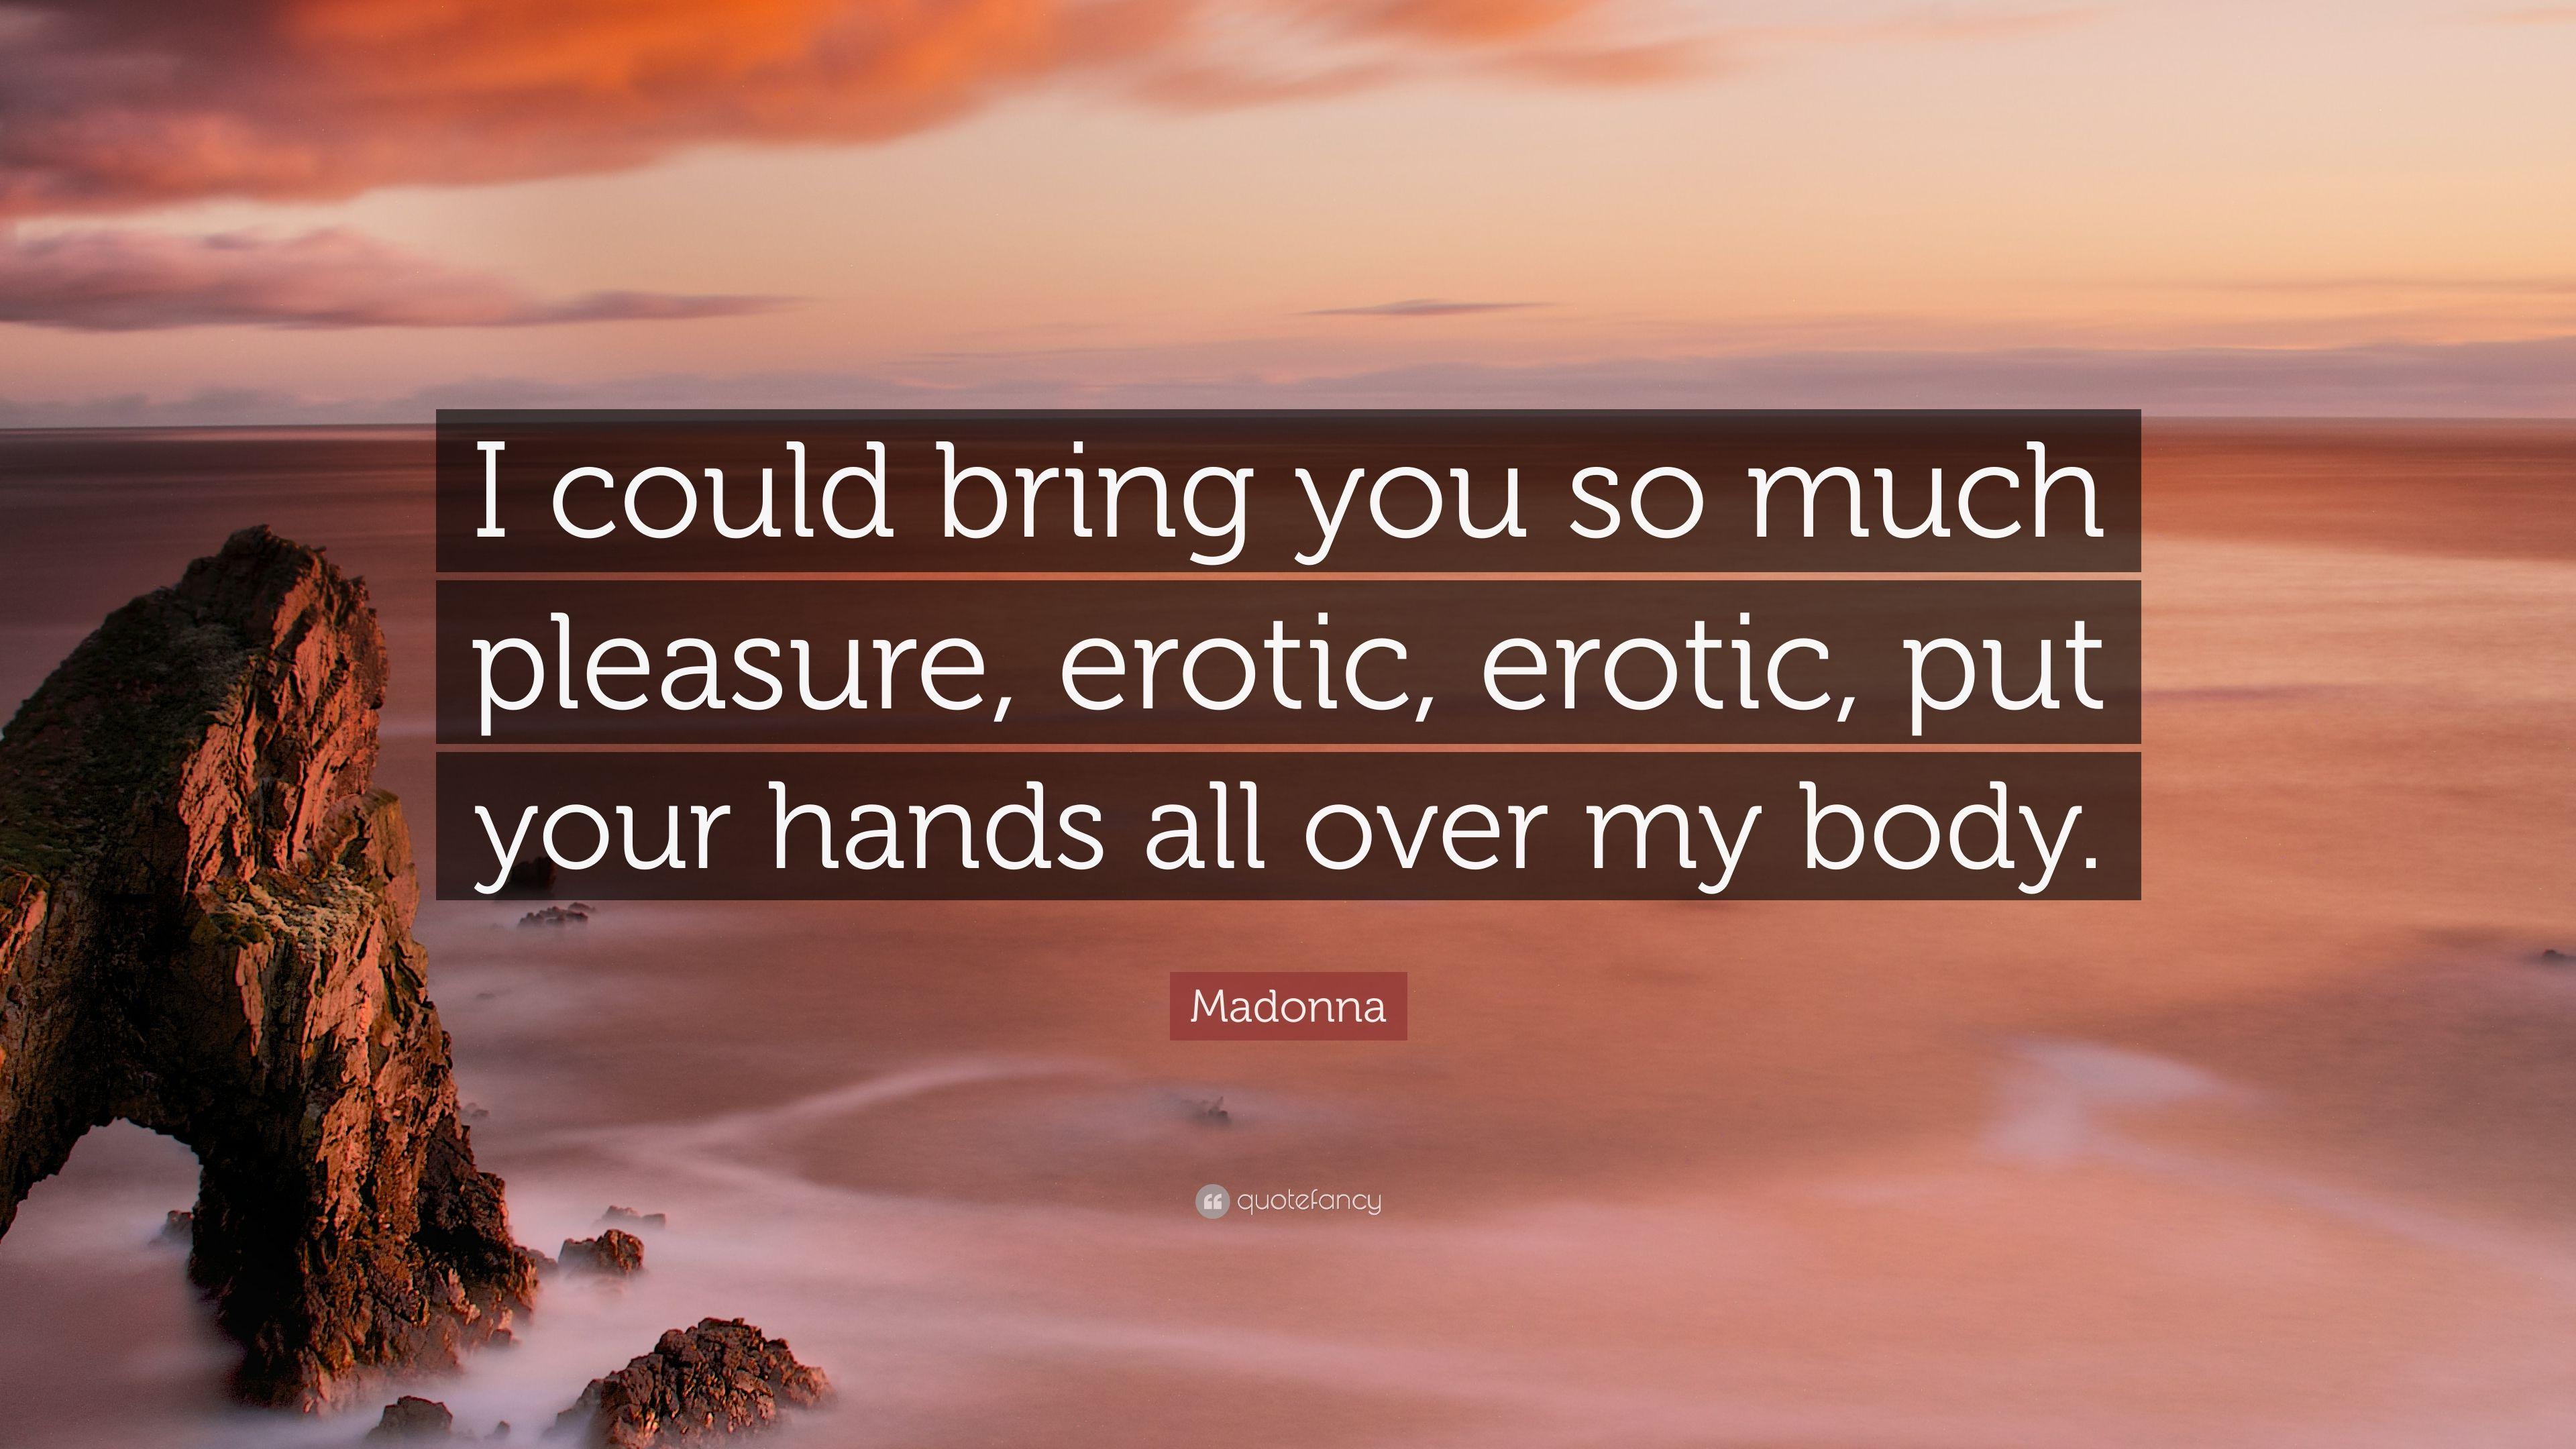 best of Put your my over Erotic hands all erotic